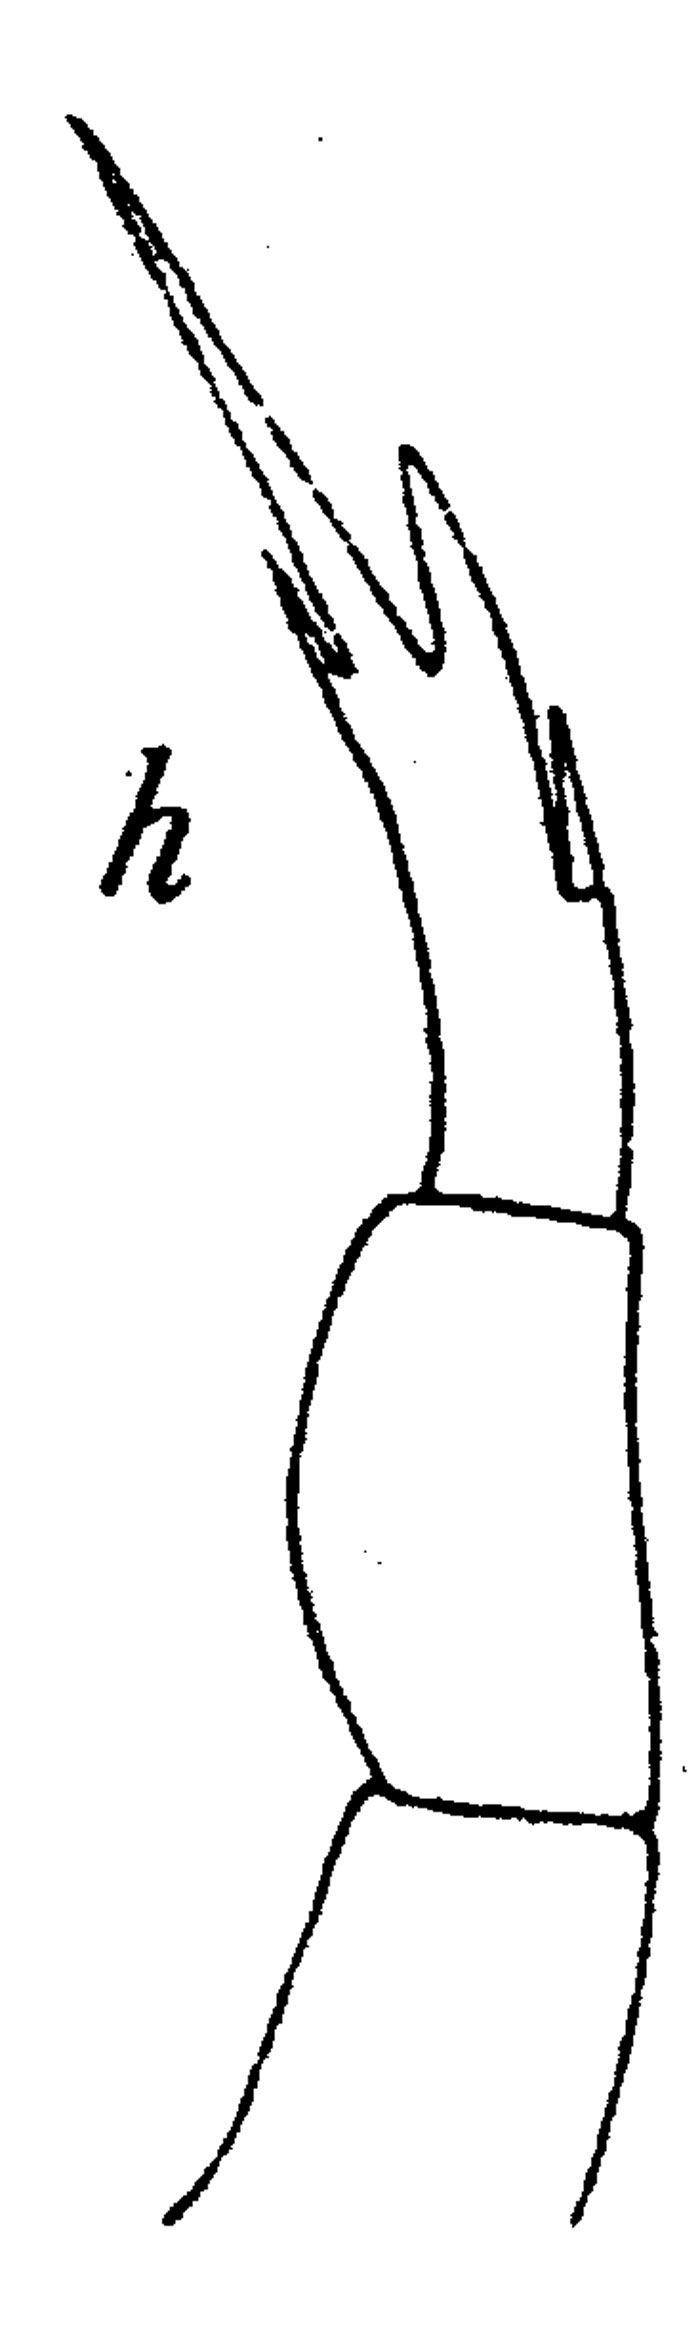 Espce Calanopia americana - Planche 2 de figures morphologiques